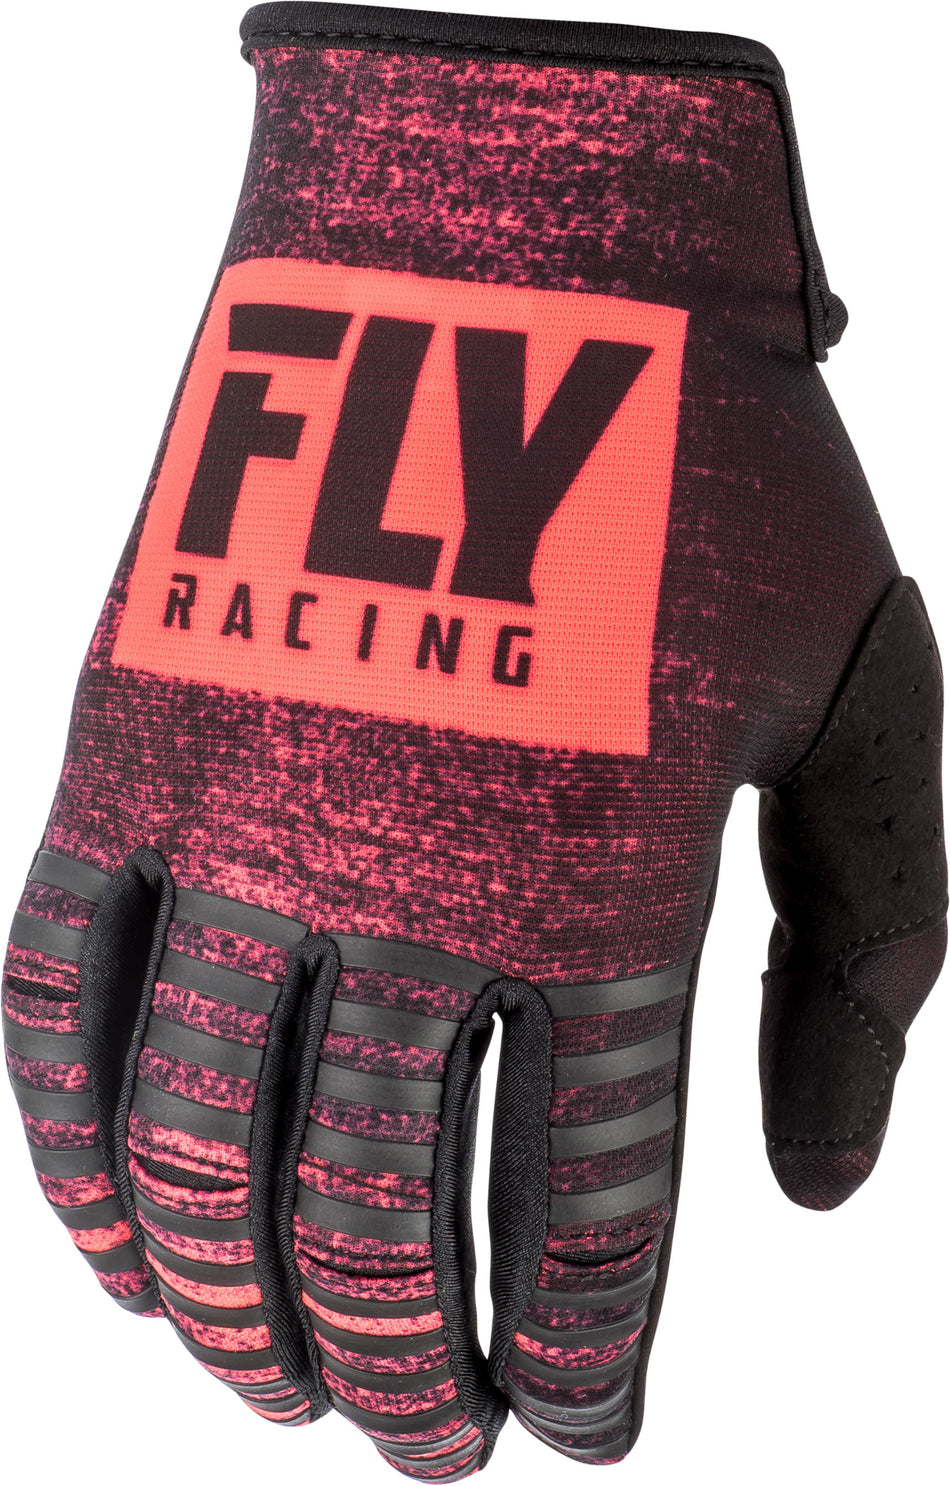 FLY RACING Kinetic Noiz Gloves Neon Red/Black Sz 13 372-51213